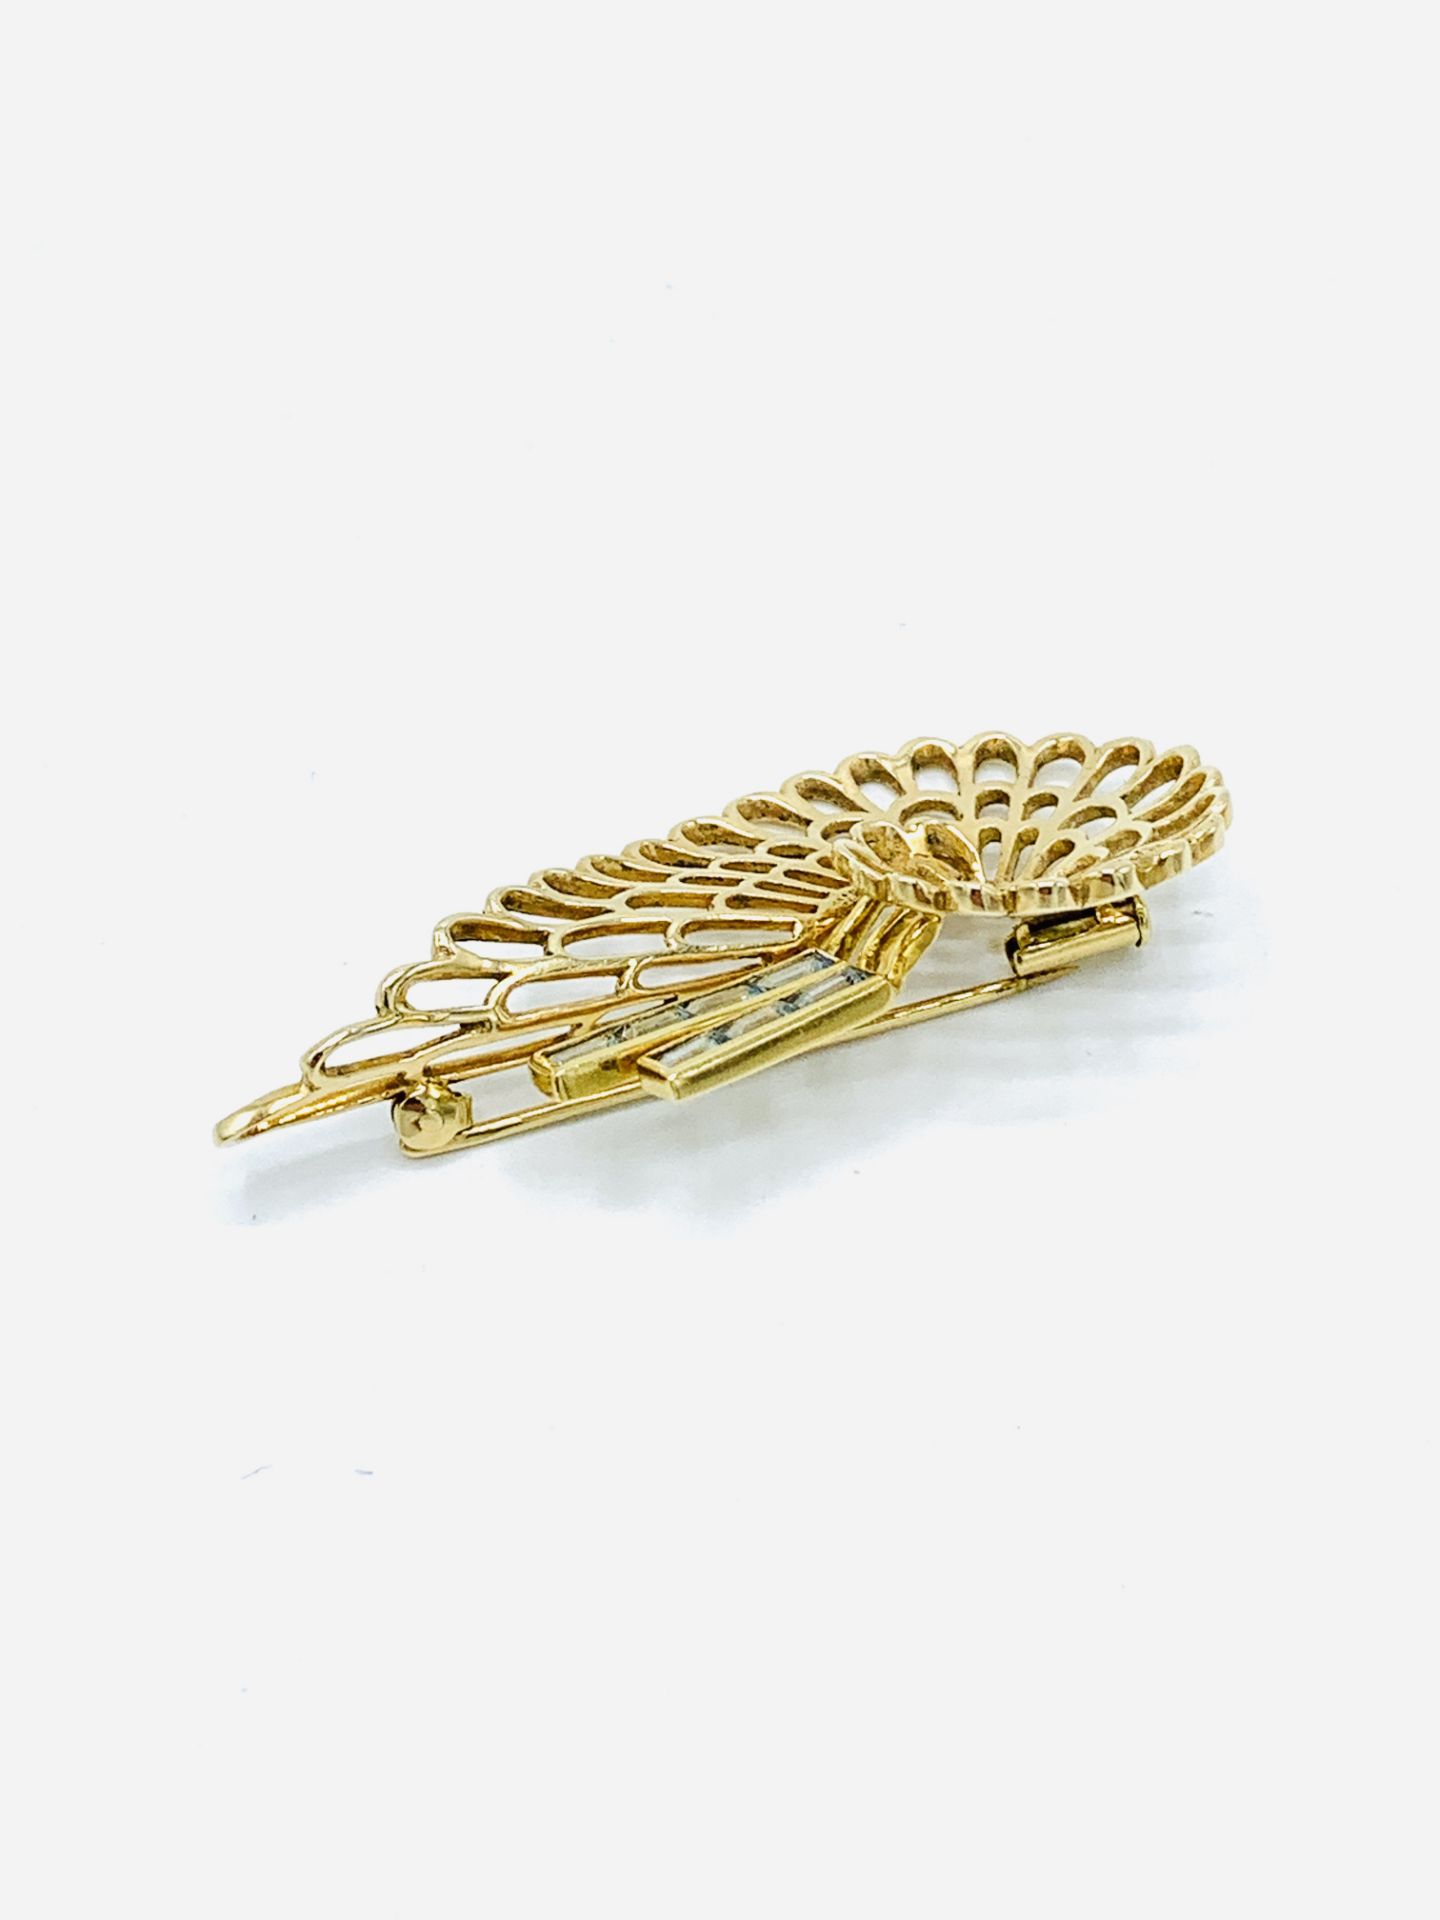 585 gold filigree brooch set with 7 aquamarines. - Image 6 of 6